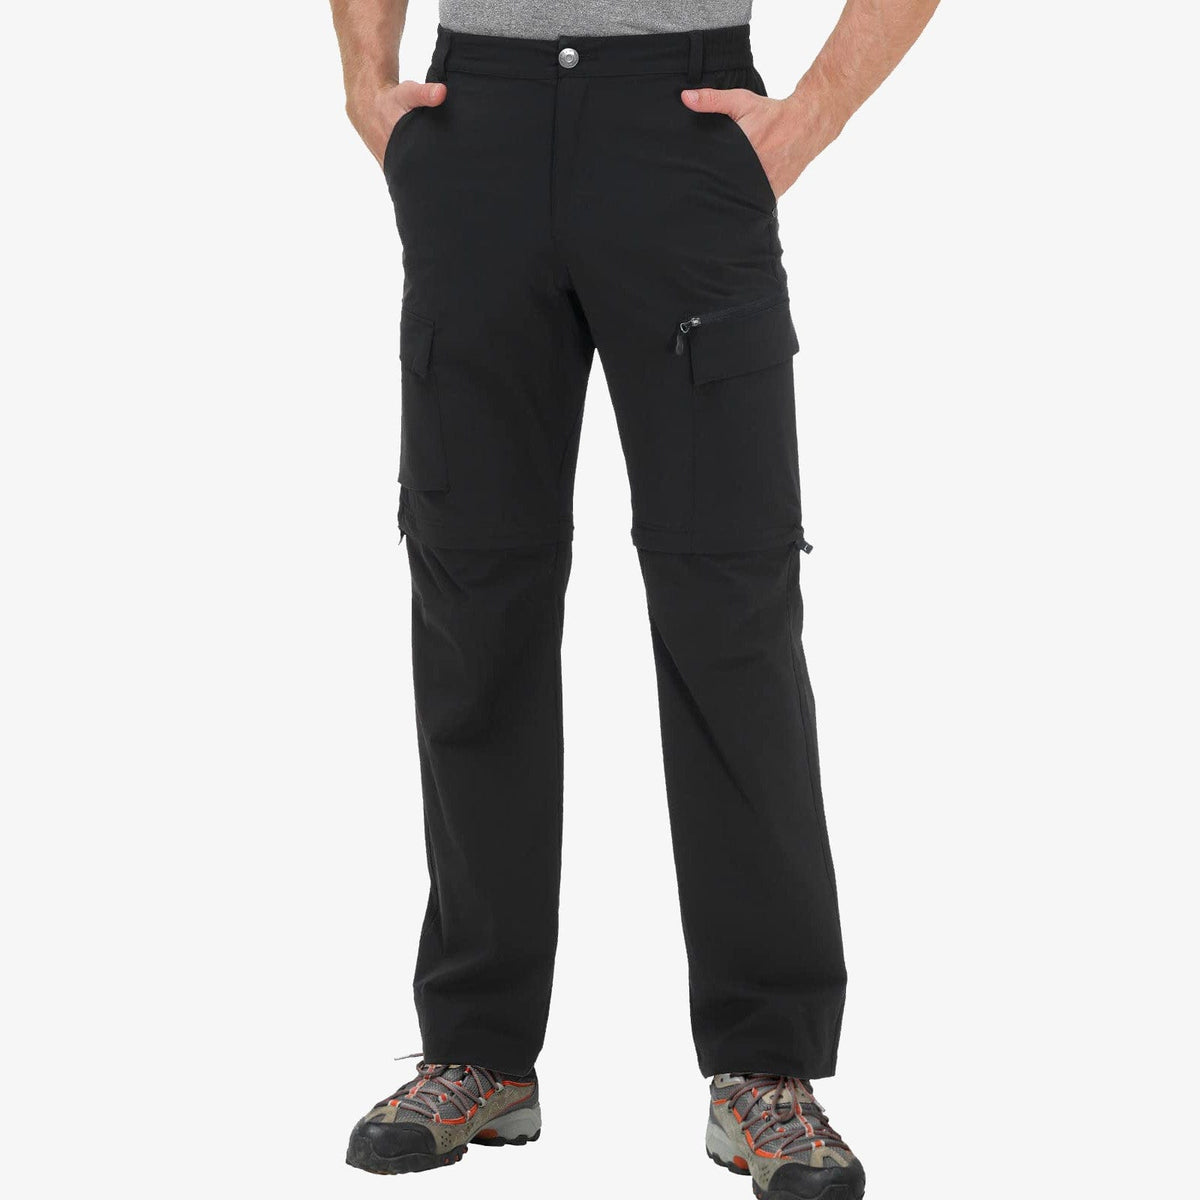 Mier Men's Convertible Hiking Pants Zip Off Quick Dry Cargo Pants, Navy / 32